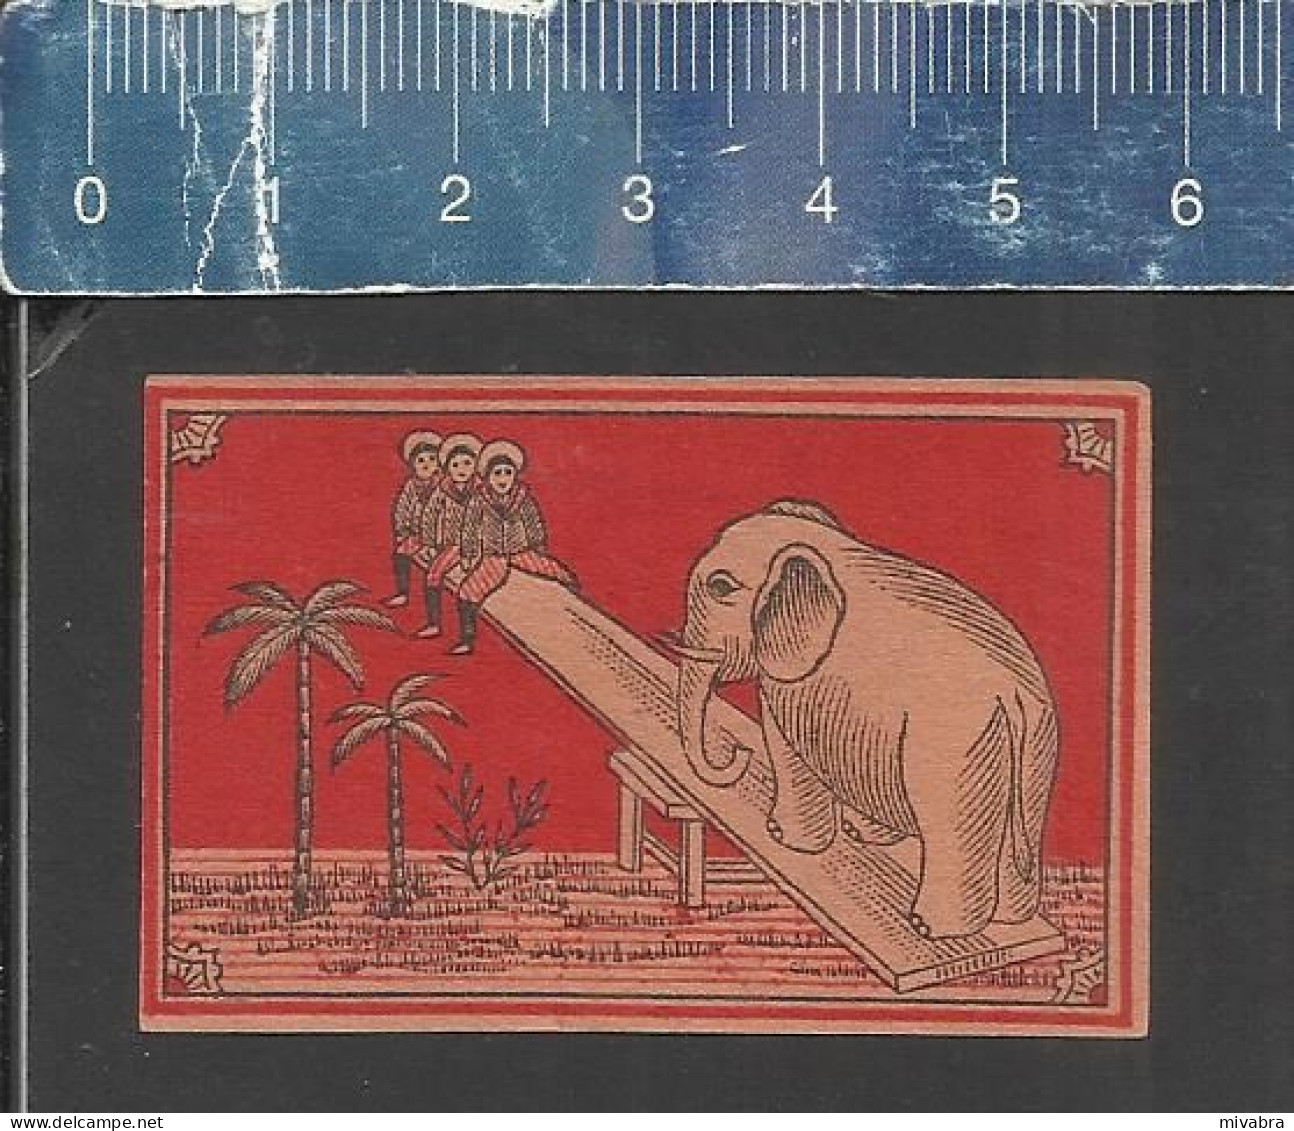 ELEPHANT CIRCUS ACT  (ELEFANT OLIFANT JUMBO) - OLD VINTAGE MATCHBOX LABEL MADE IN JAPAN - Zündholzschachteletiketten